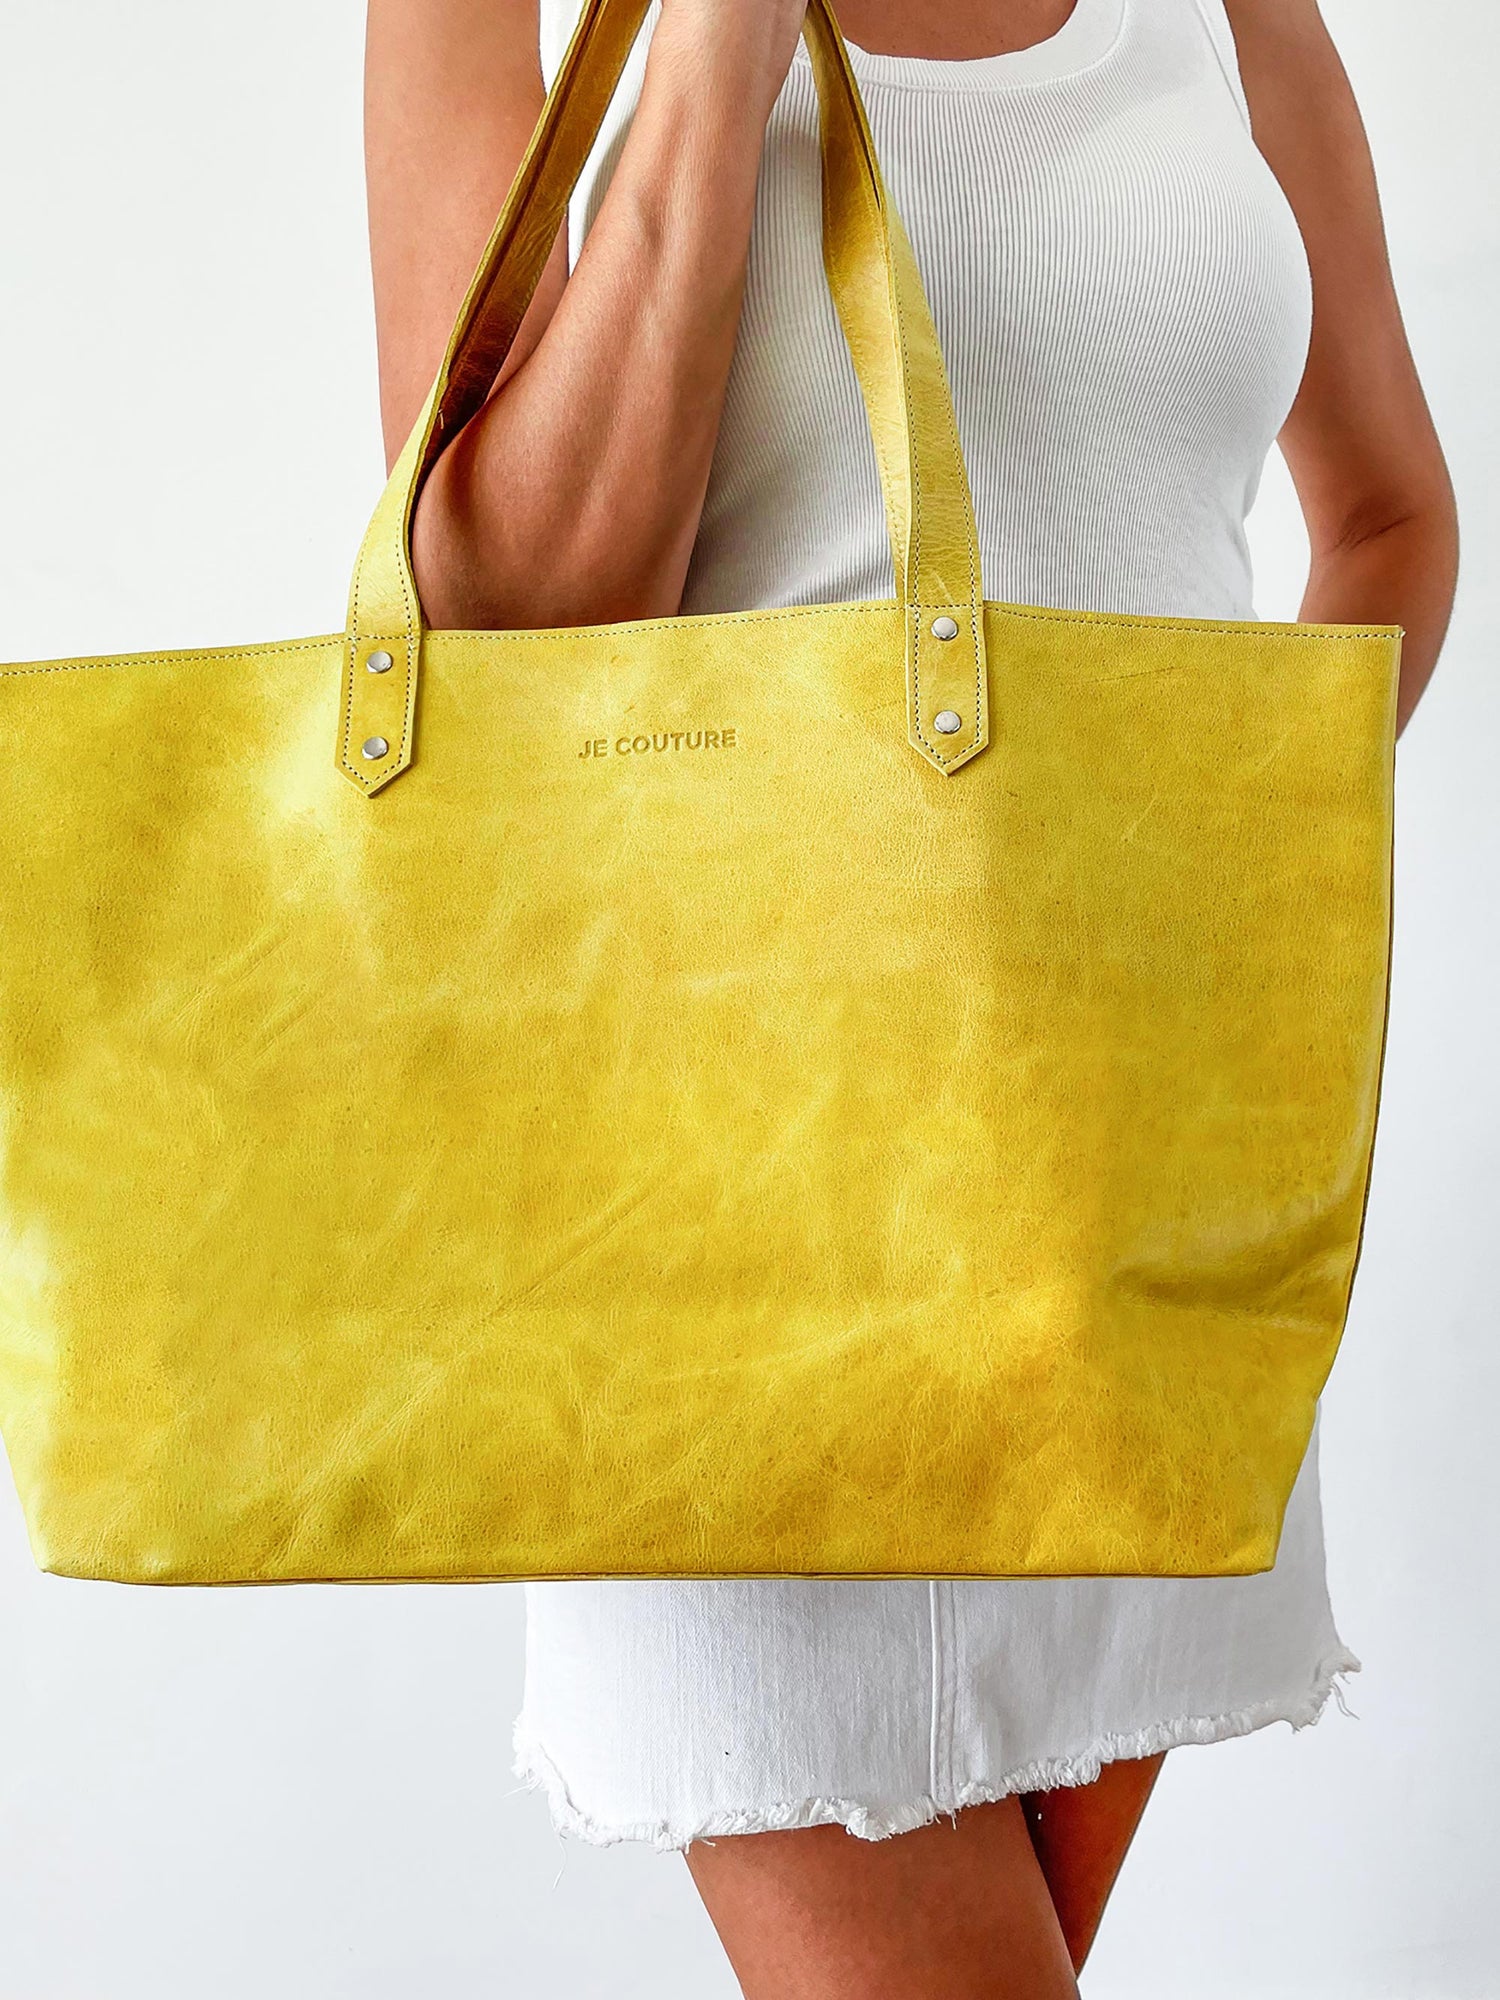 Je Couture - Tote Bag Yellow | Fashion